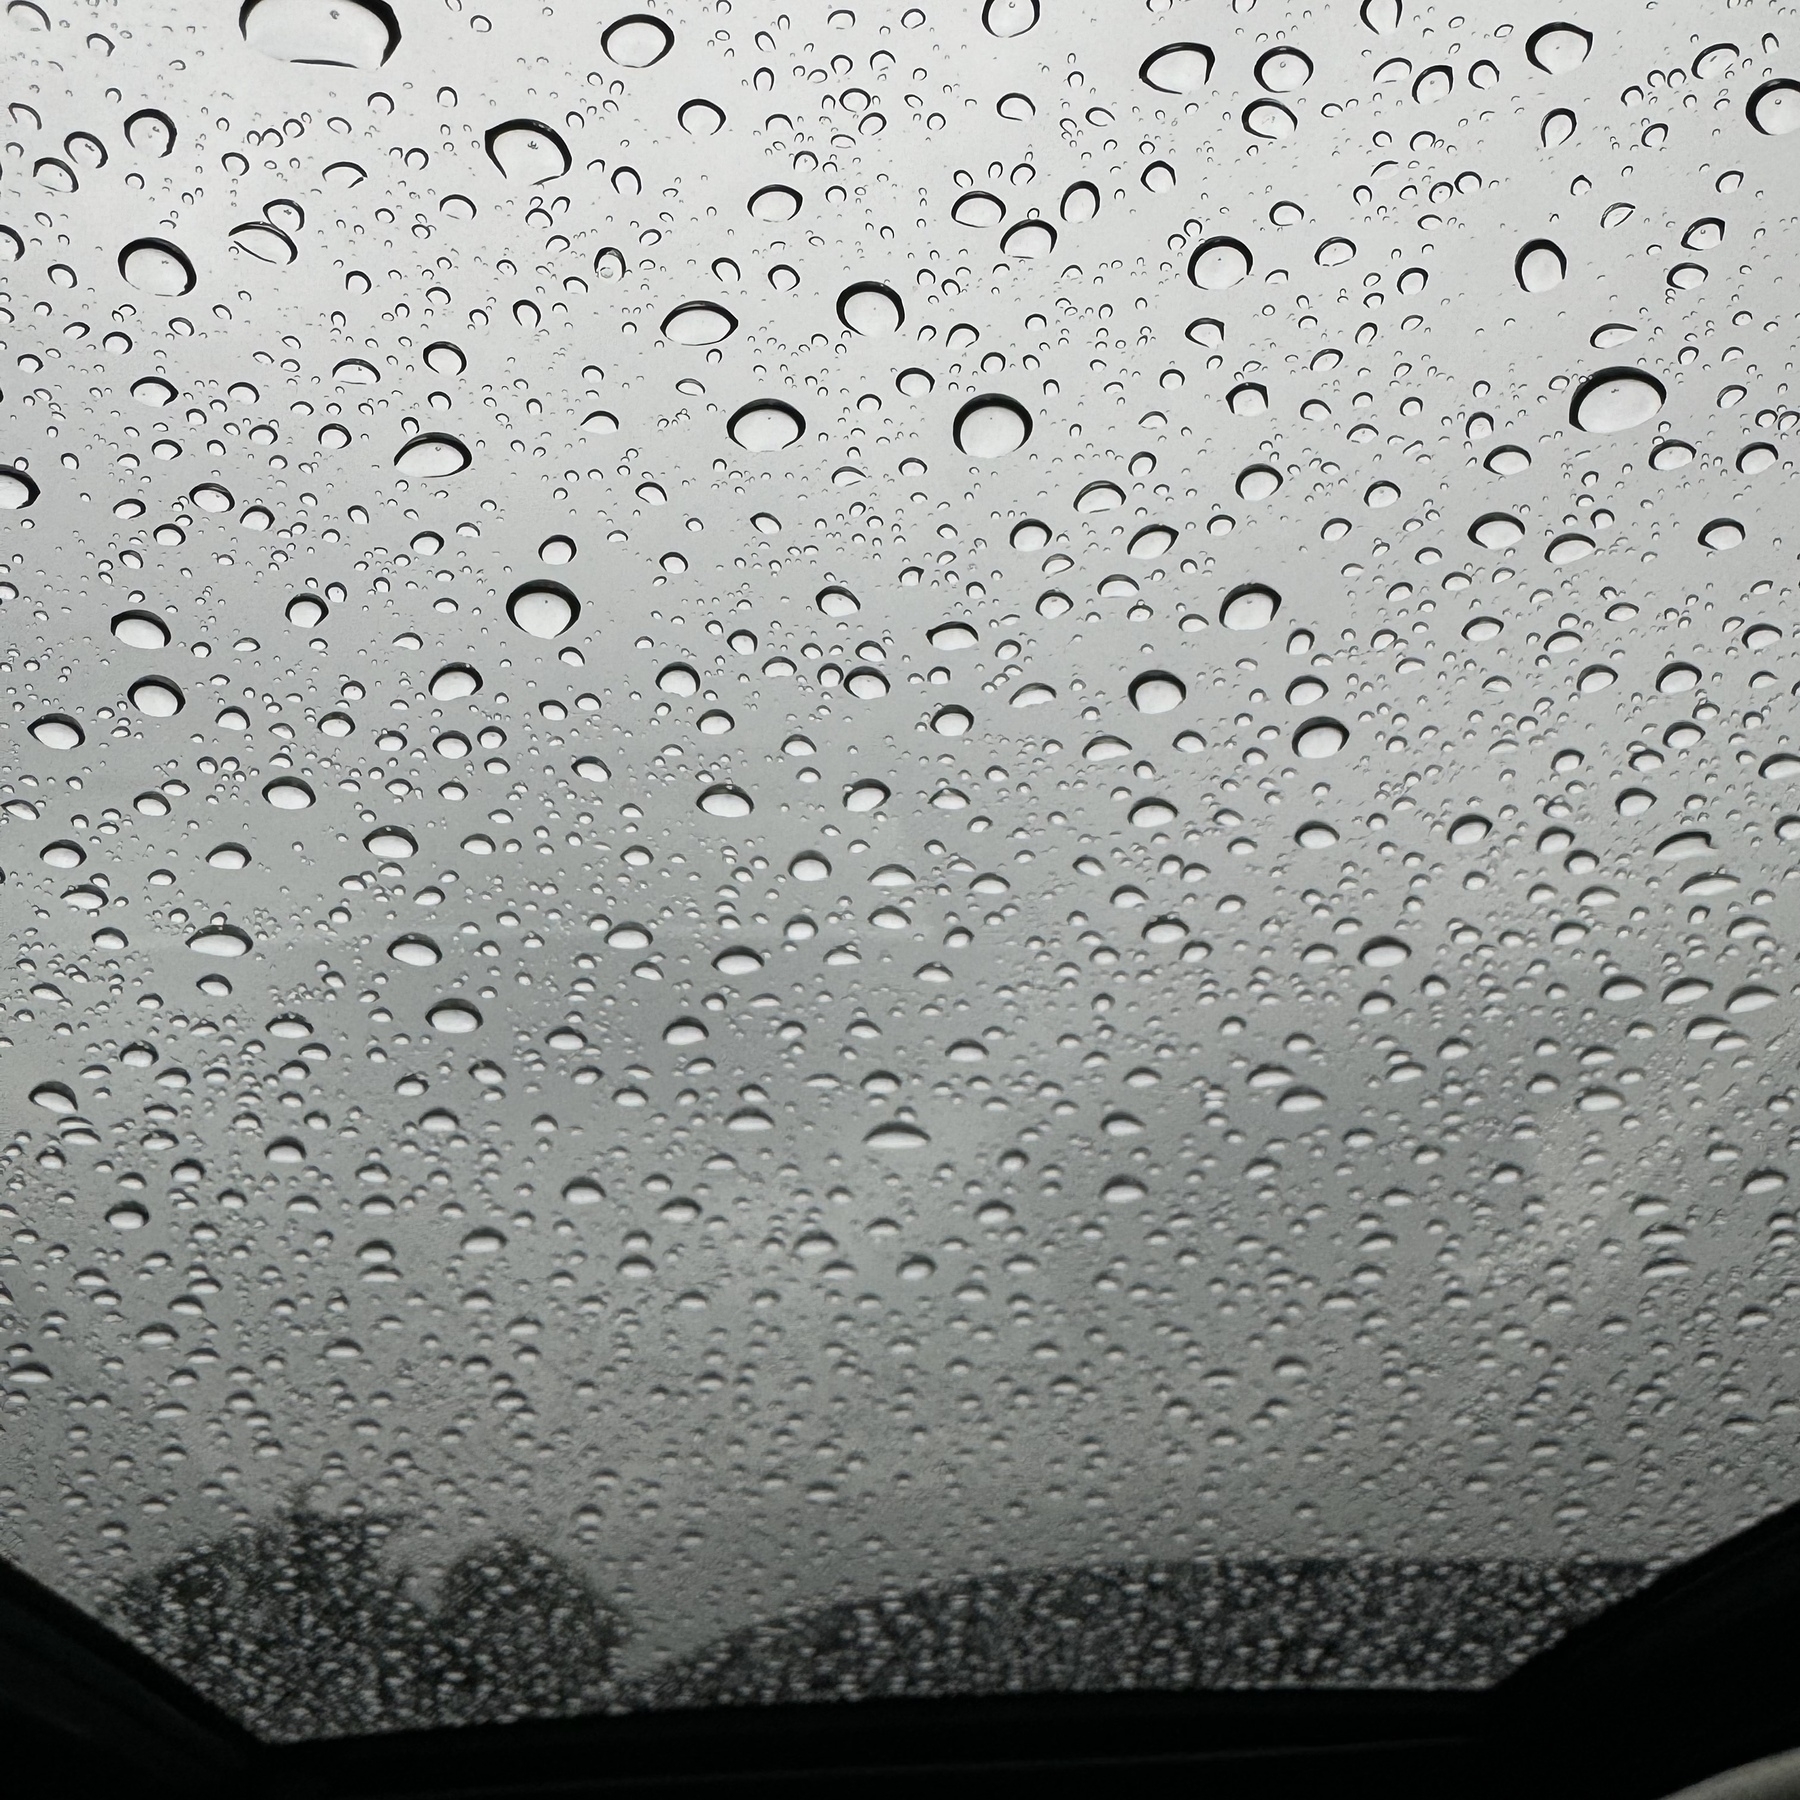 Rain drops gathered on a sunroof